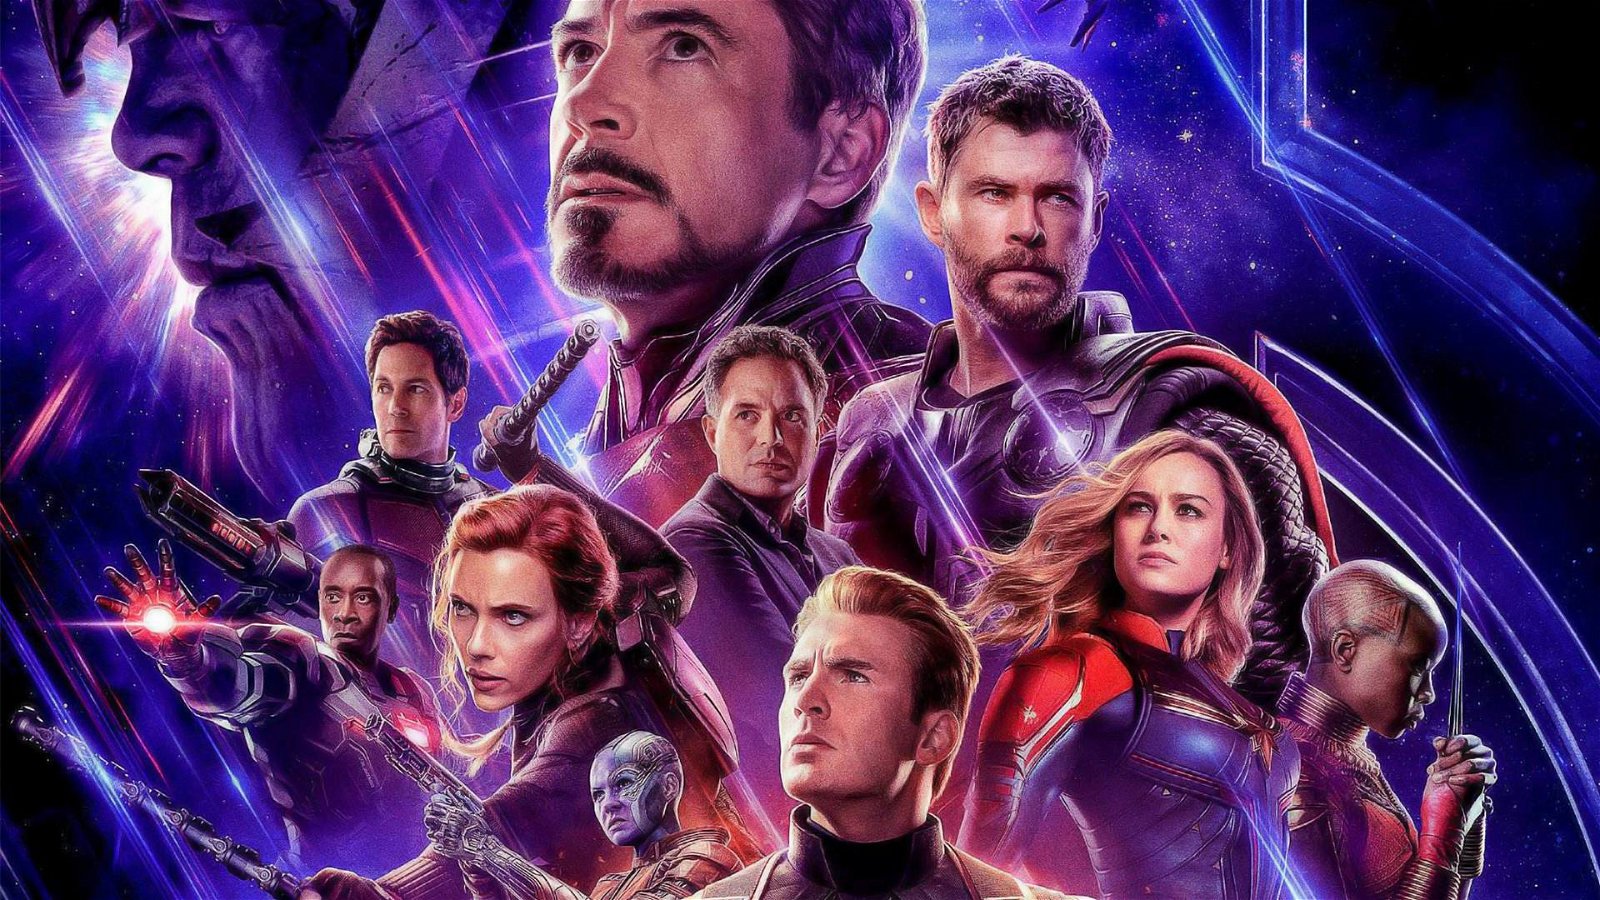 Immagine di Avengers: Endgame. Per i registi "via libera agli spoiler" da lunedì